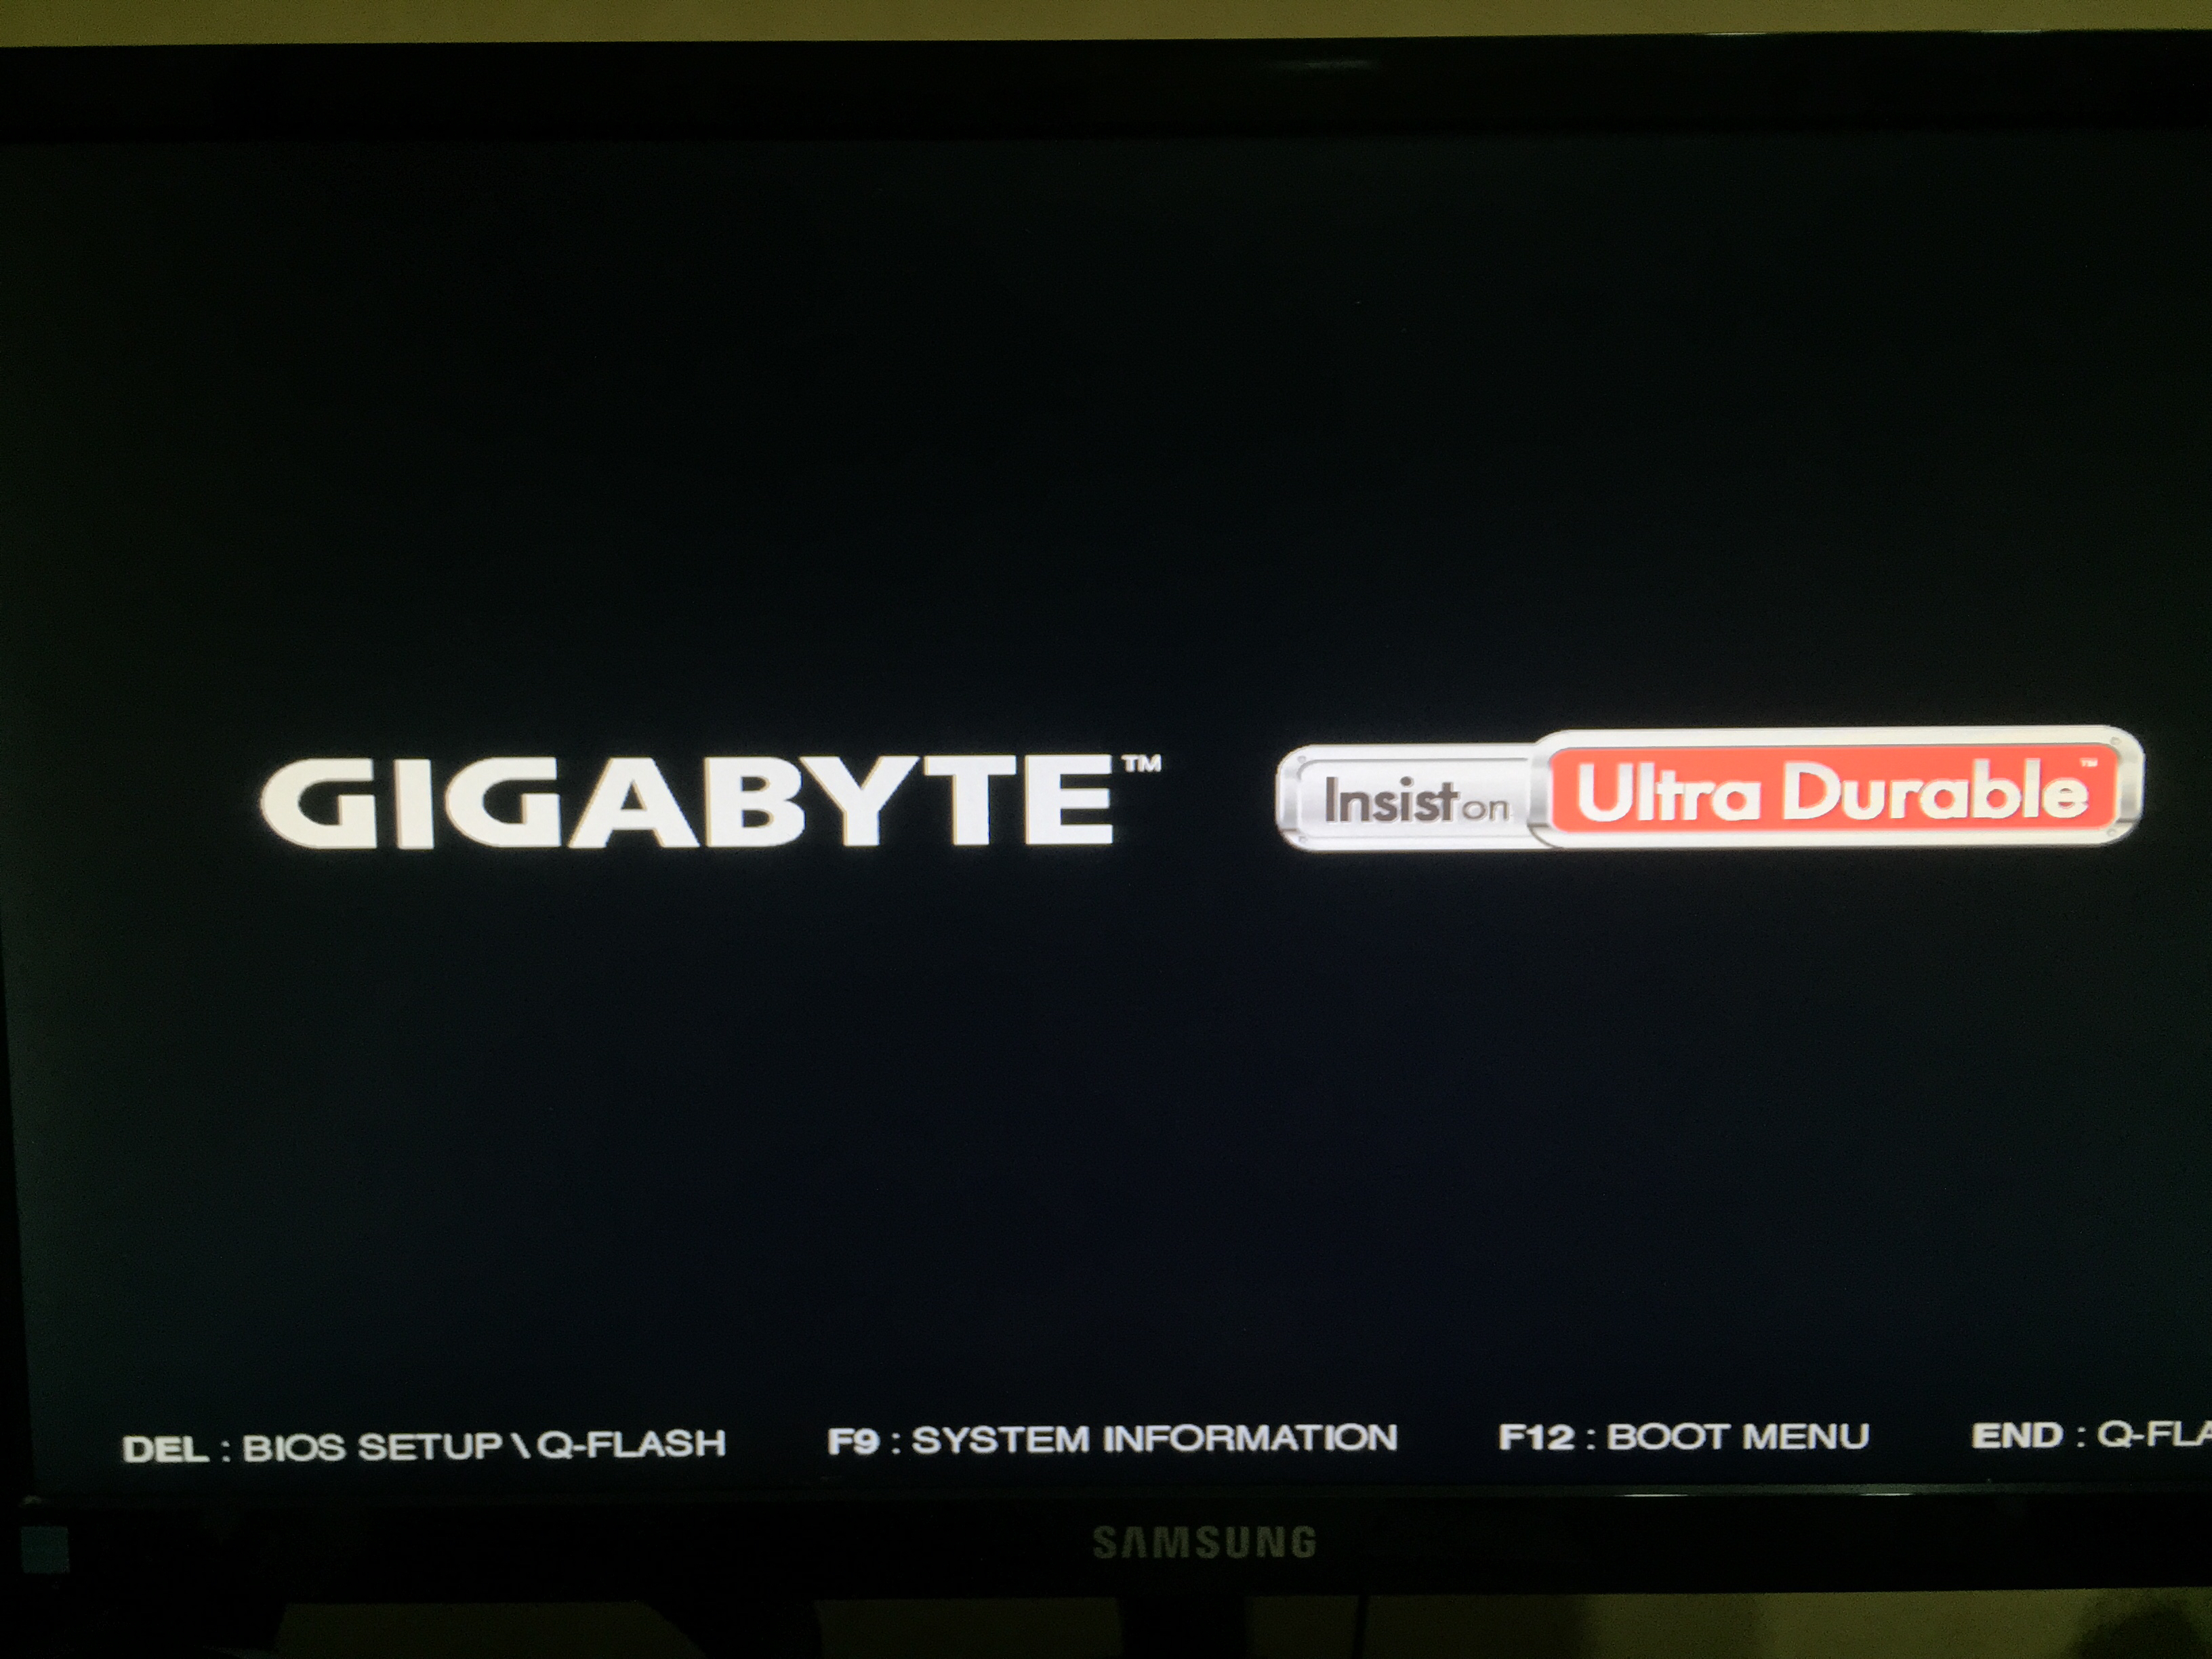 Gigabyte черный экран. Заставка Gigabyte при включении. Gigabyte загрузочный экран. Загрузочный экран материнки Gigabyte. Gigabyte Ultra durable экран BIOS экран.